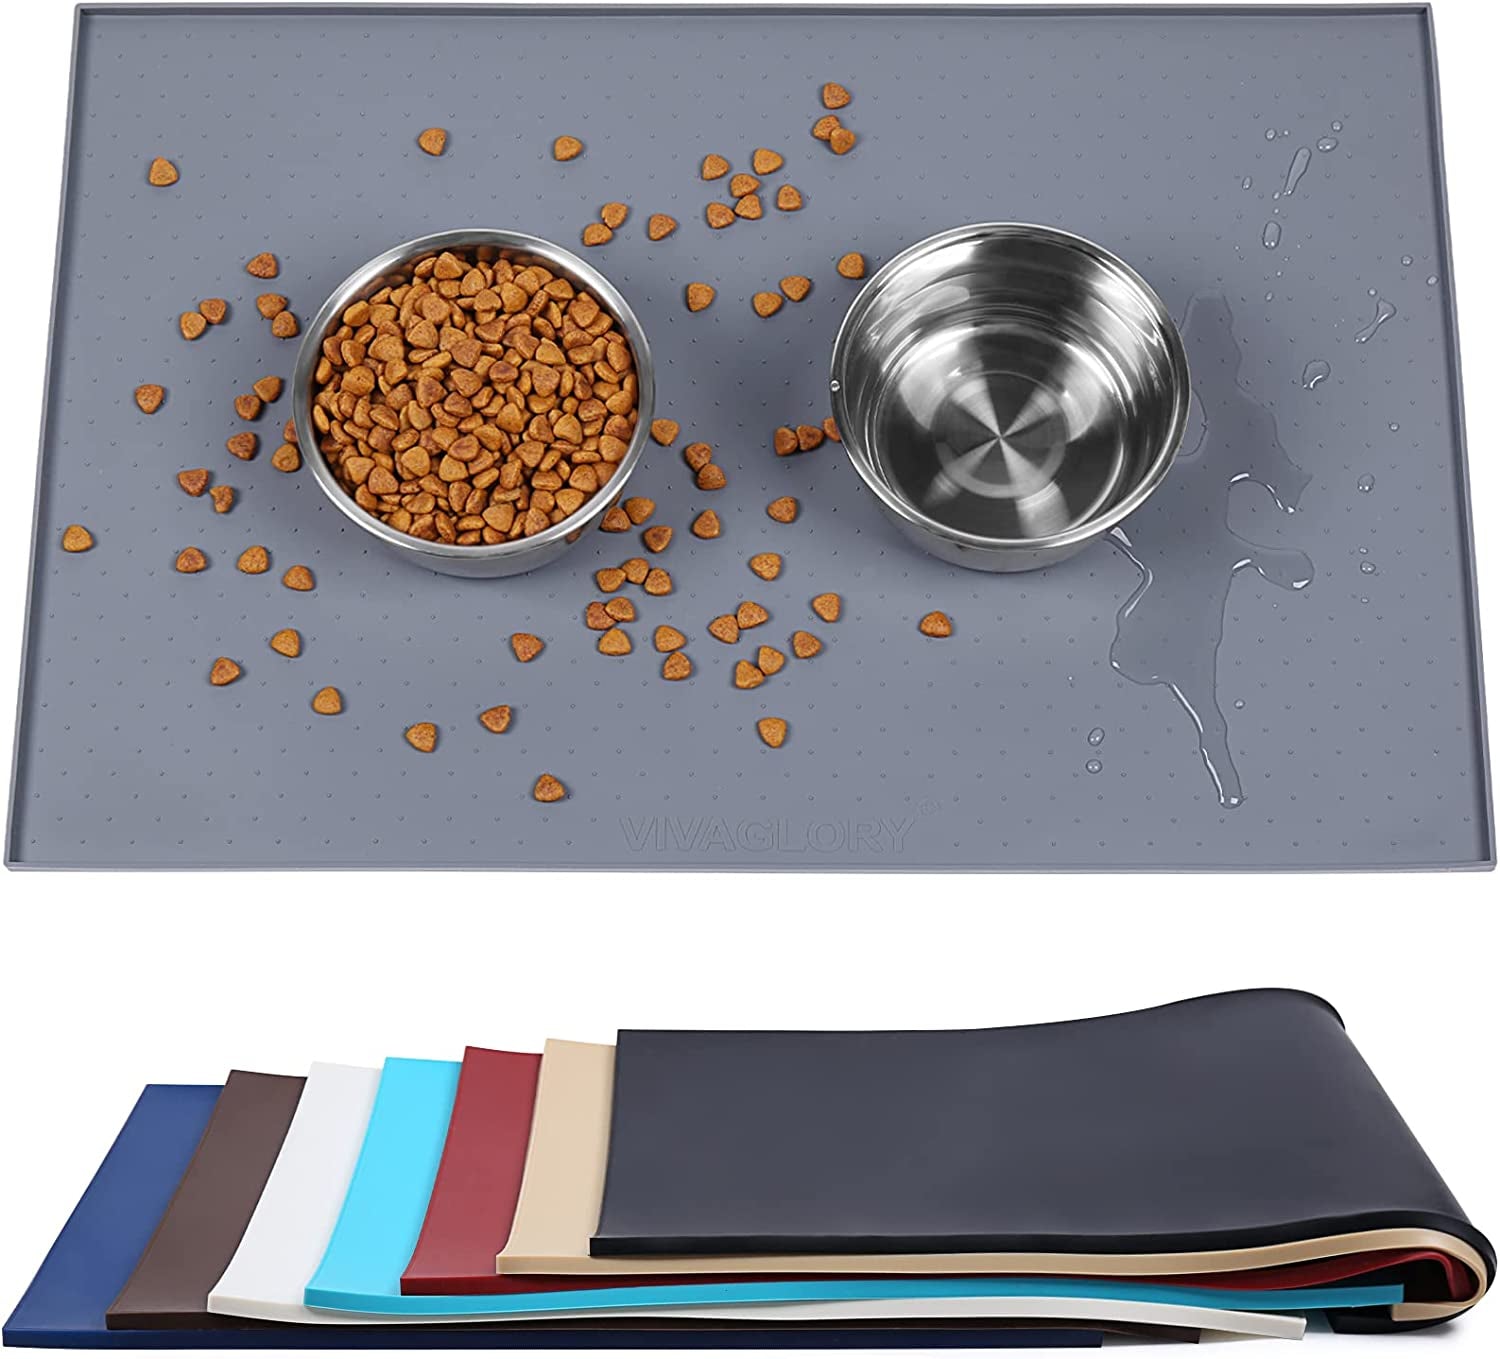 24" L X 16" W Dog Feeding Mat, Waterproof Non-Slip Pet Silicone Food Mat Cat Dog Stainless Steel Water Bowl Placemat Anti-Messy Design, Grey